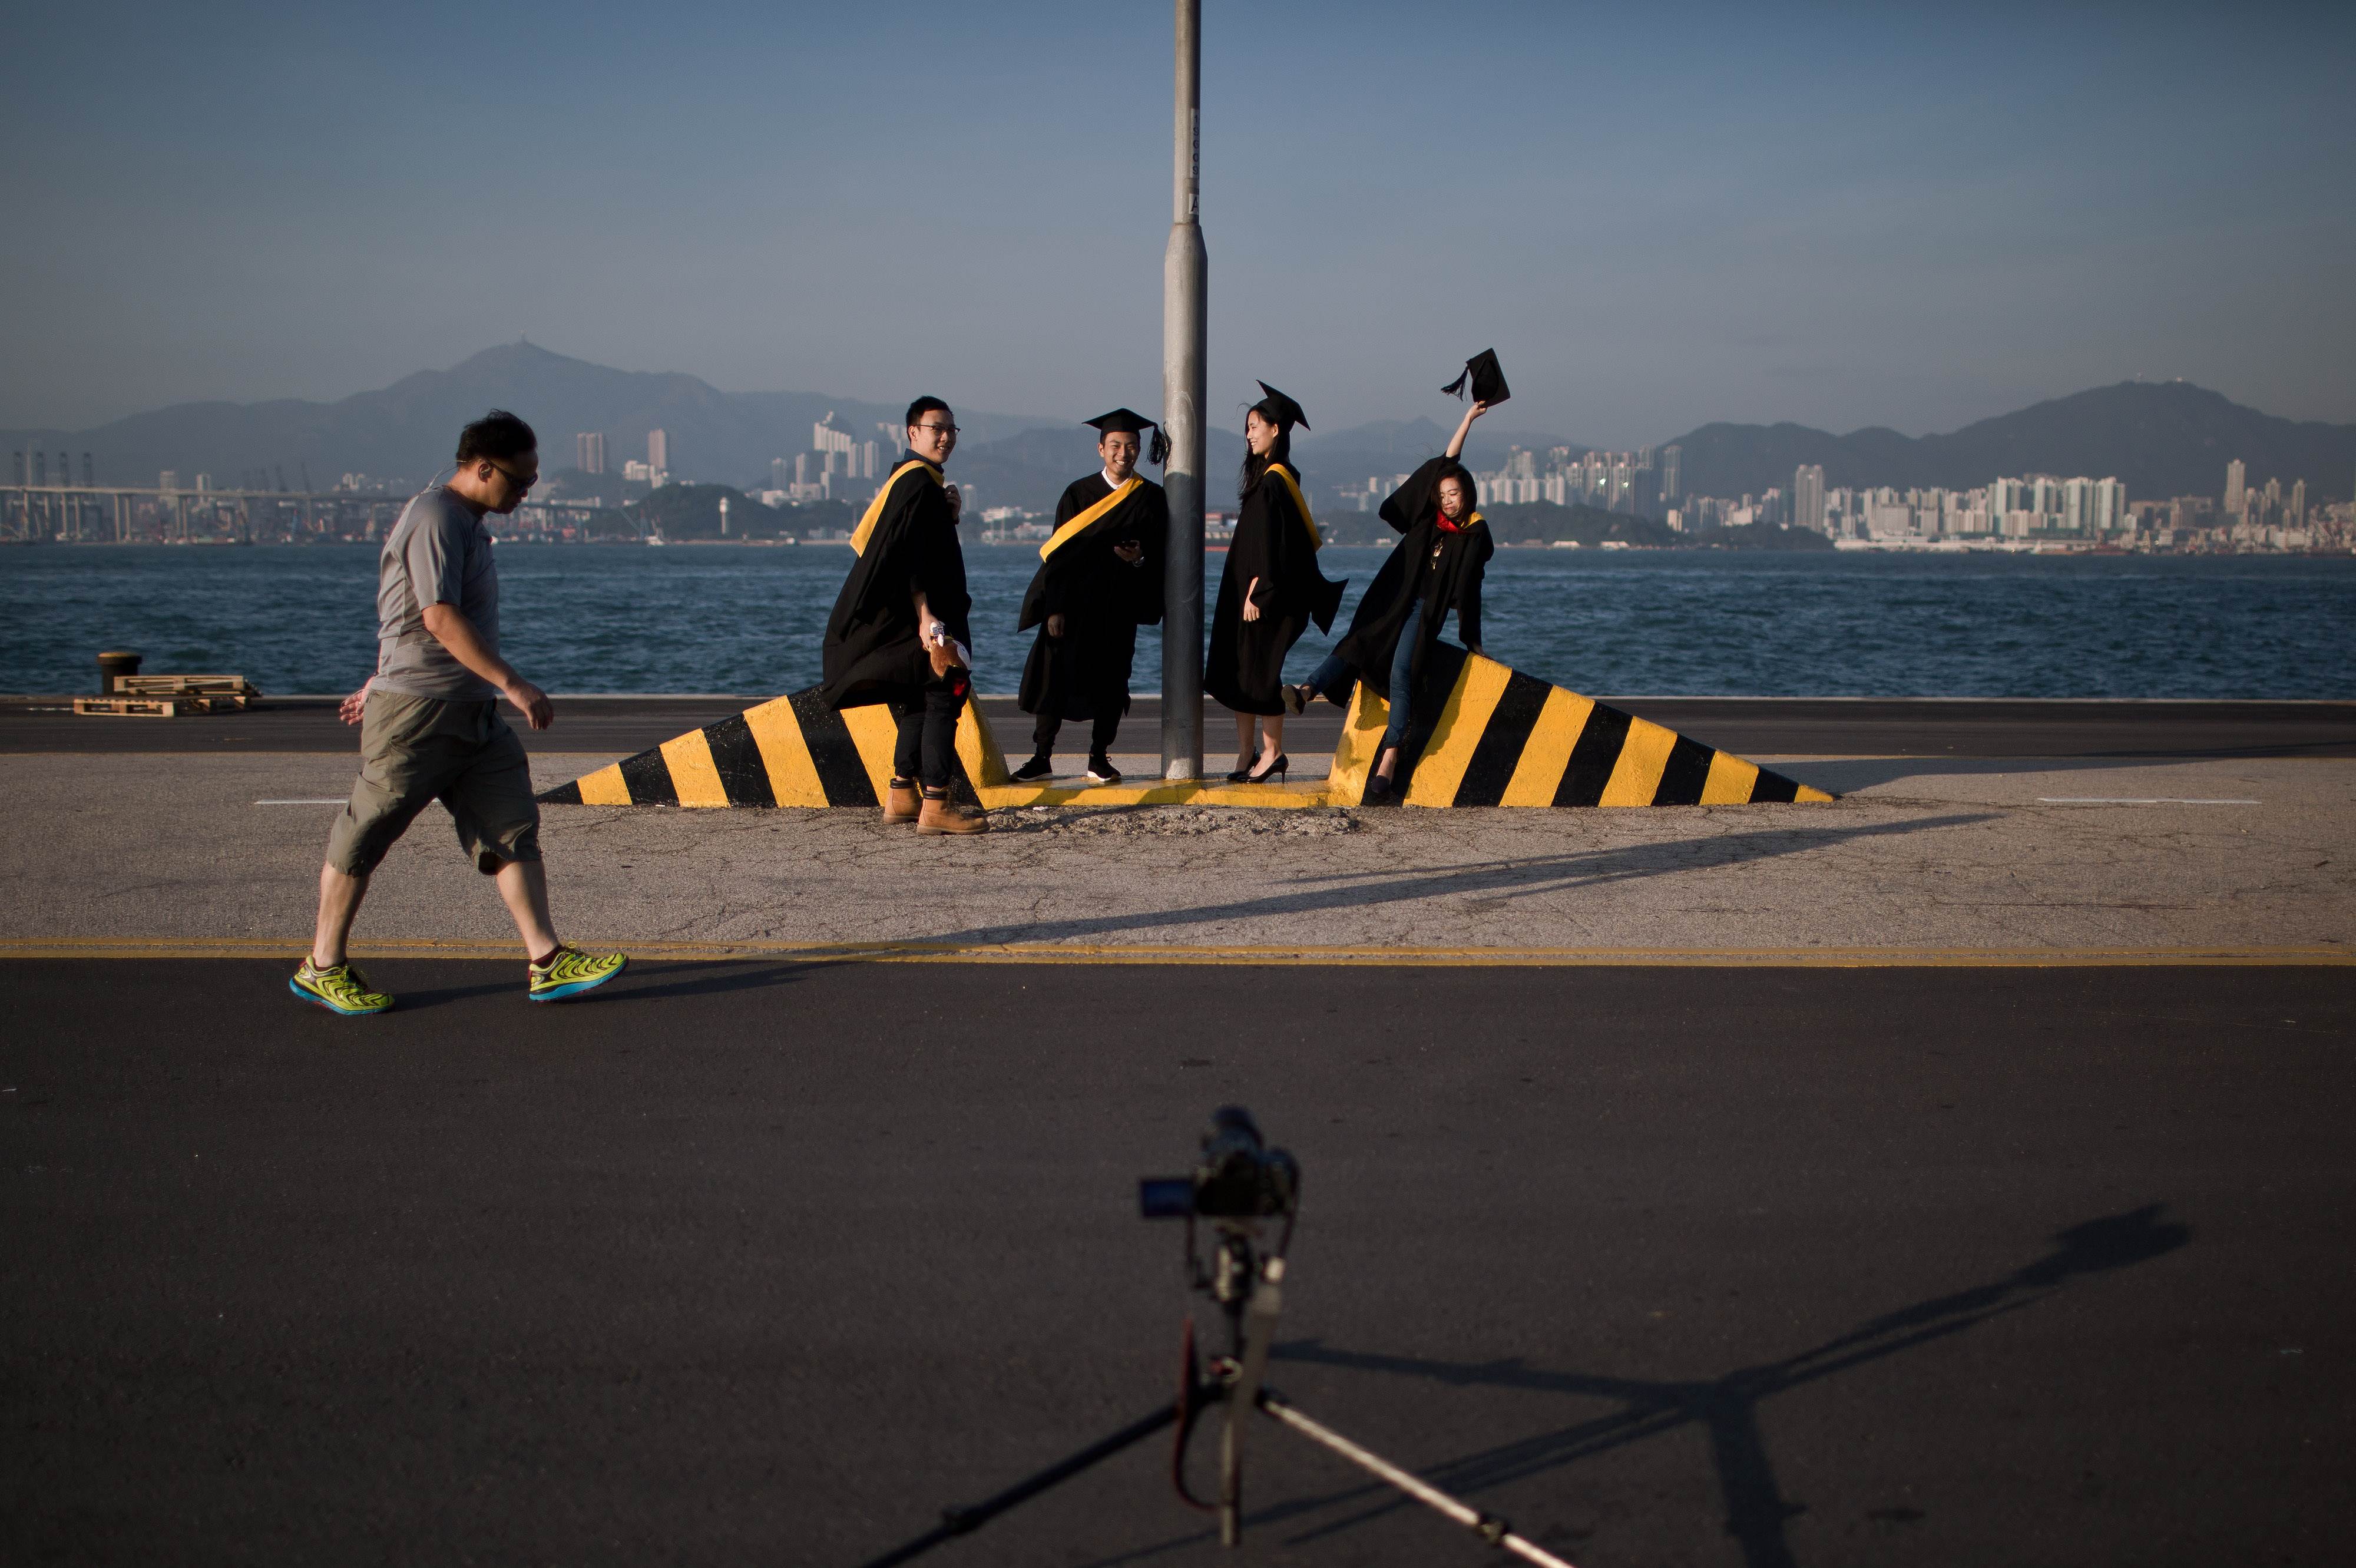 University students pose for graduation photographs on a public pier in Hong Kong on November 28, 2015. AFP PHOTO / DALE DE LA REY